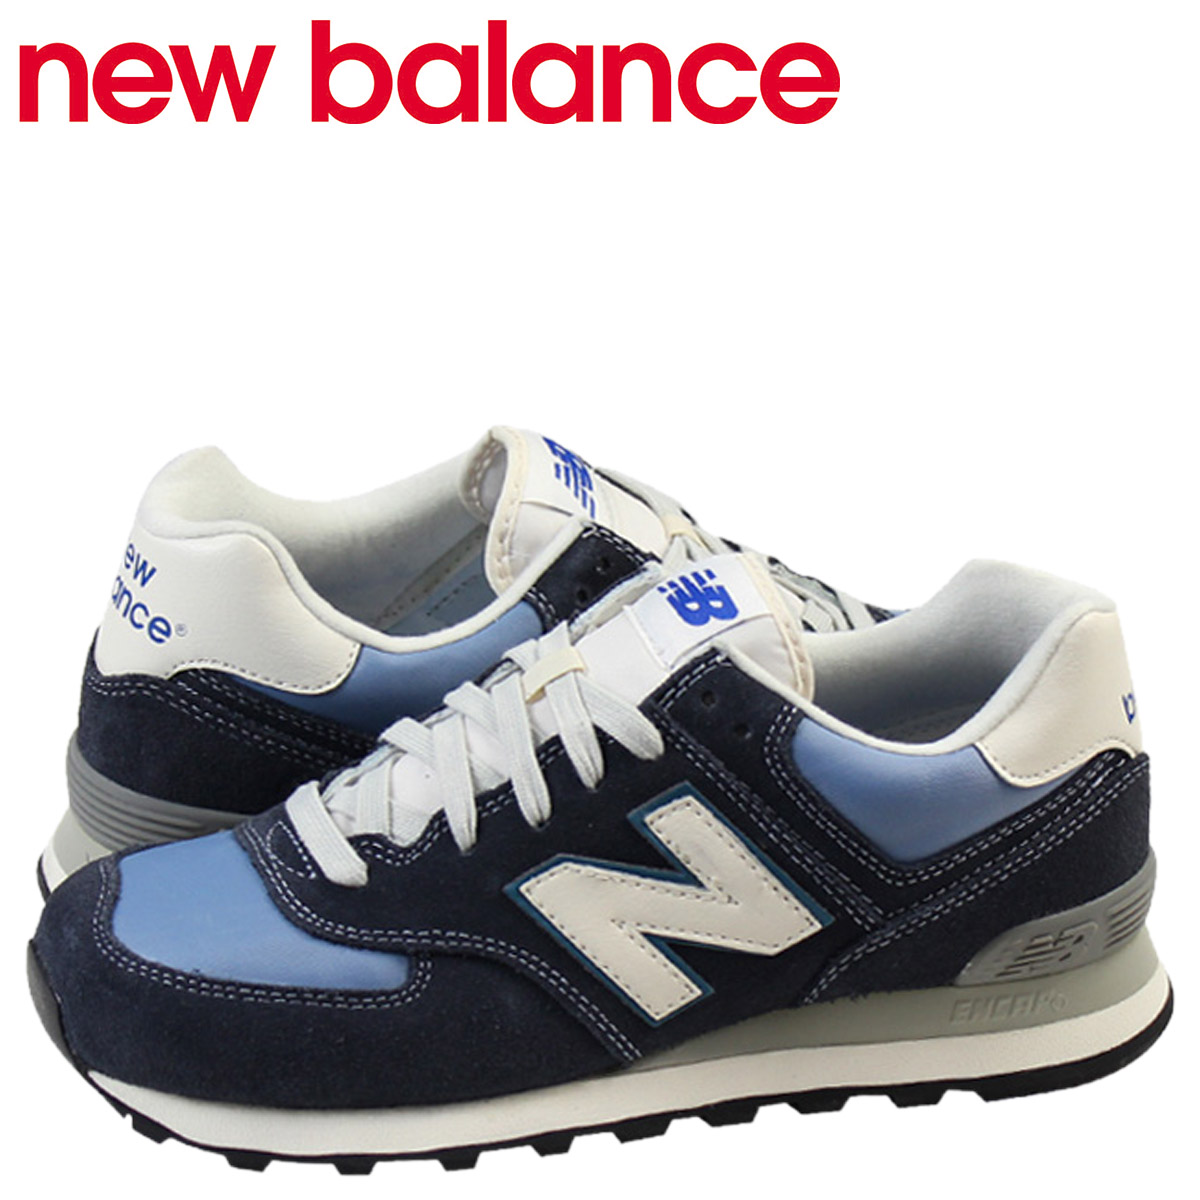 new balance men shoe